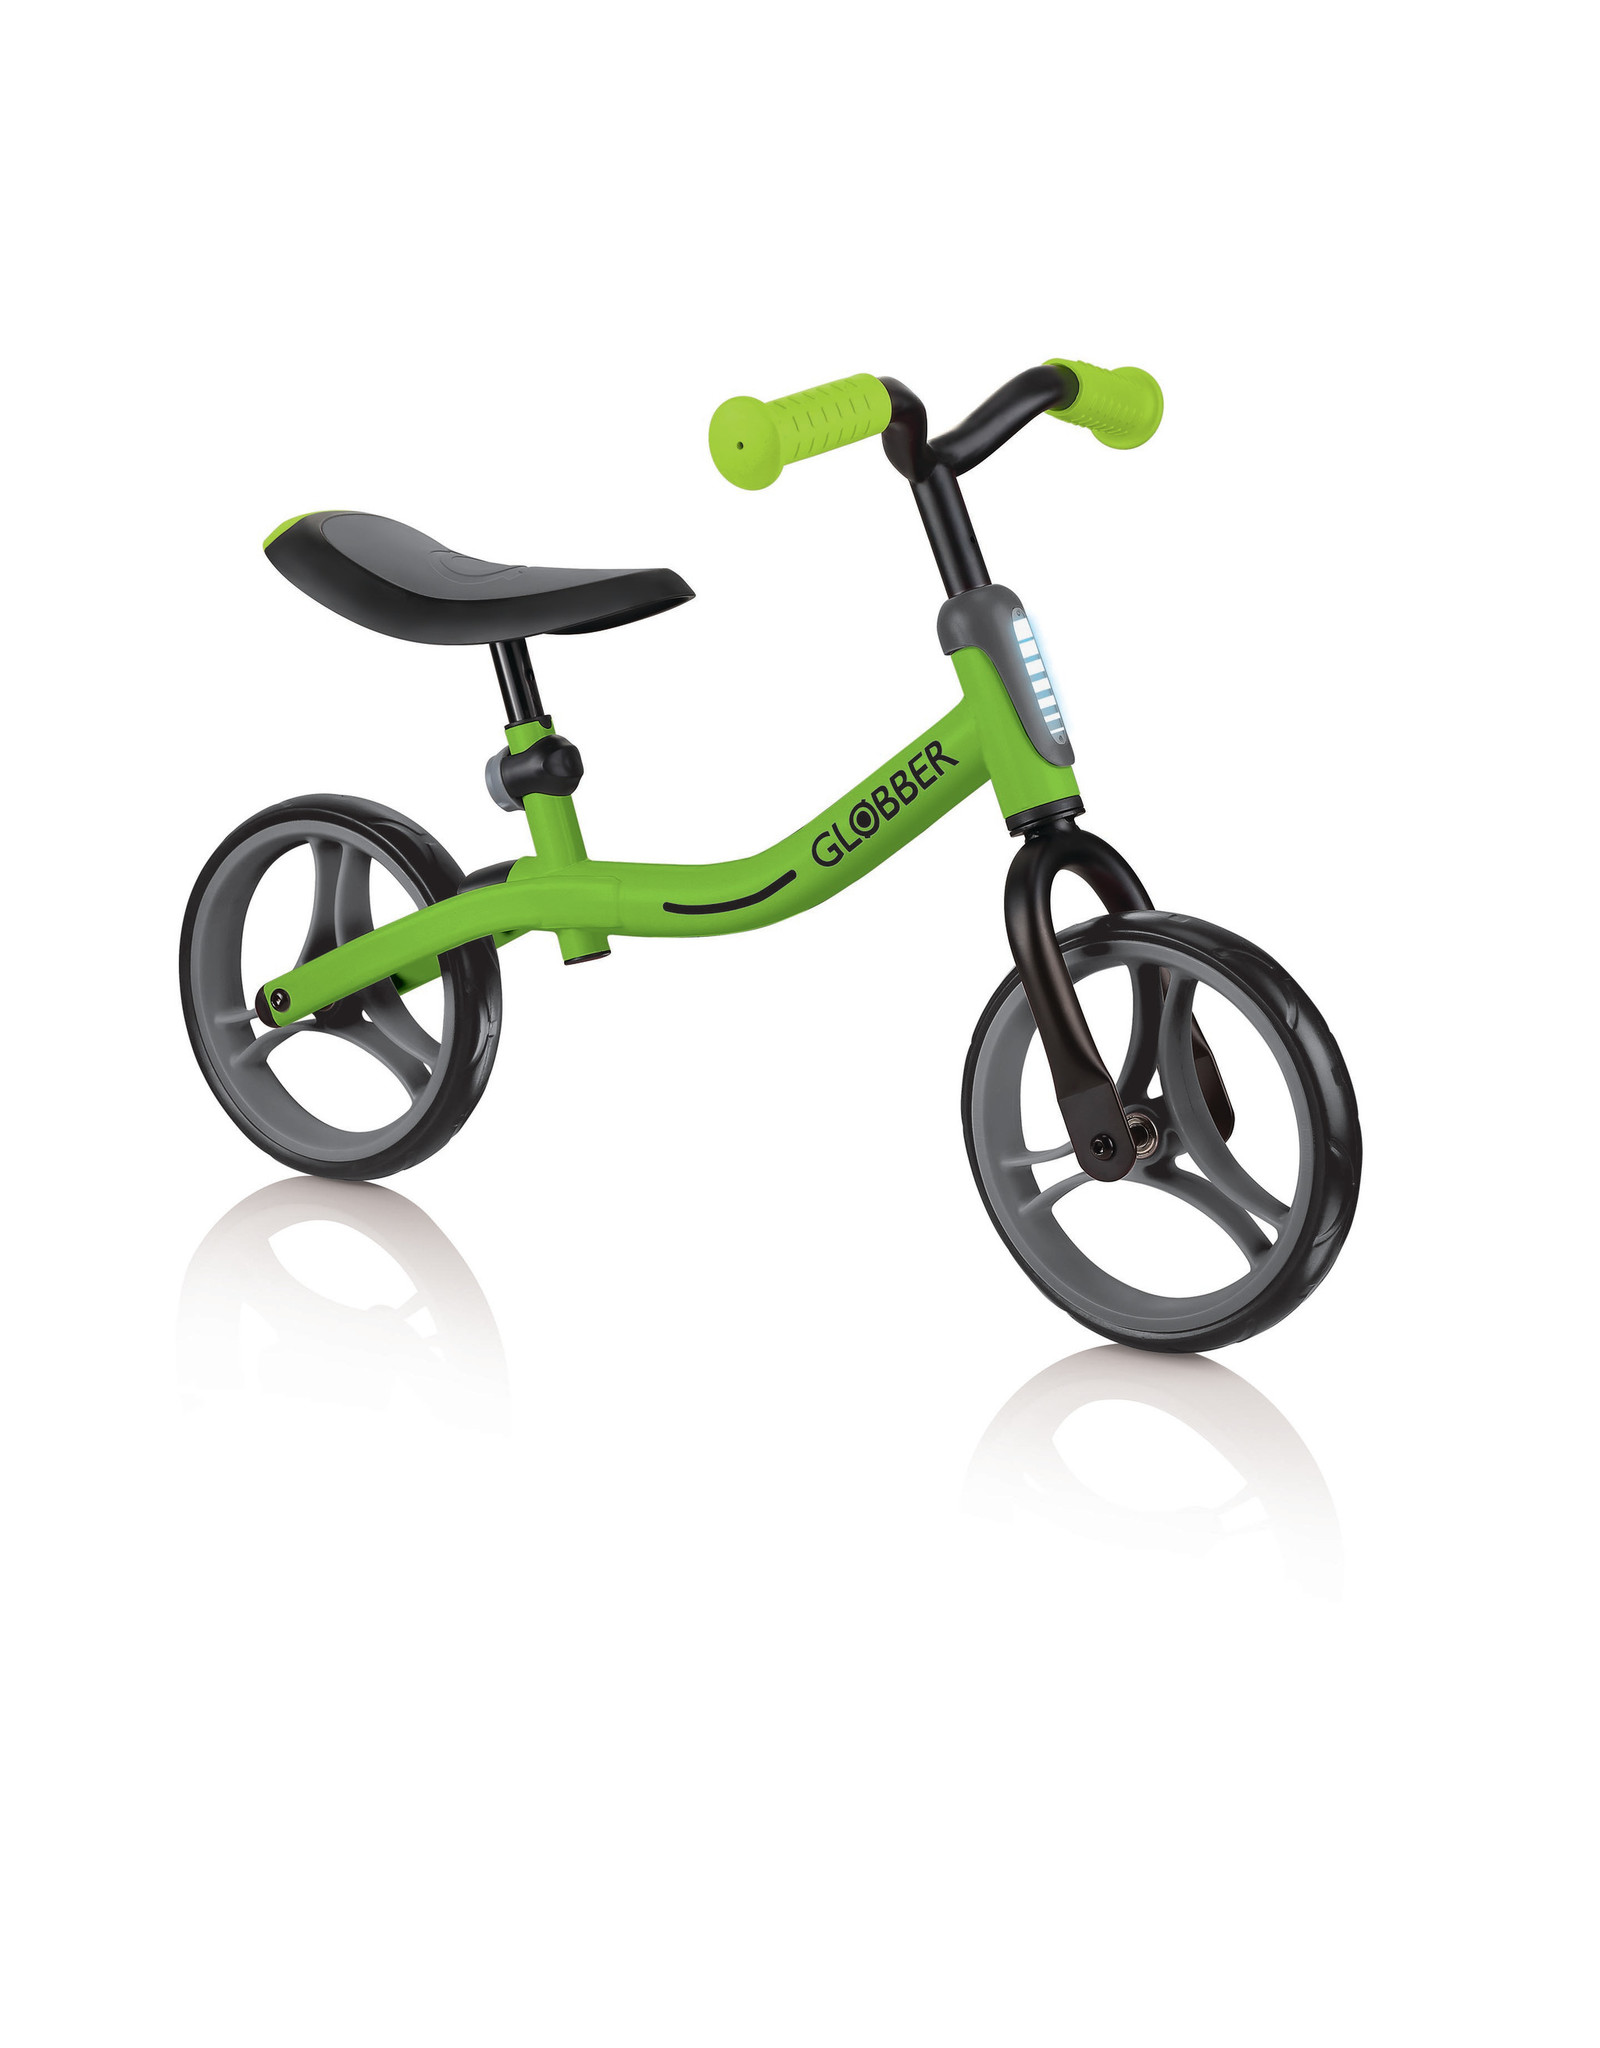 Globber Go Bike Lime Green